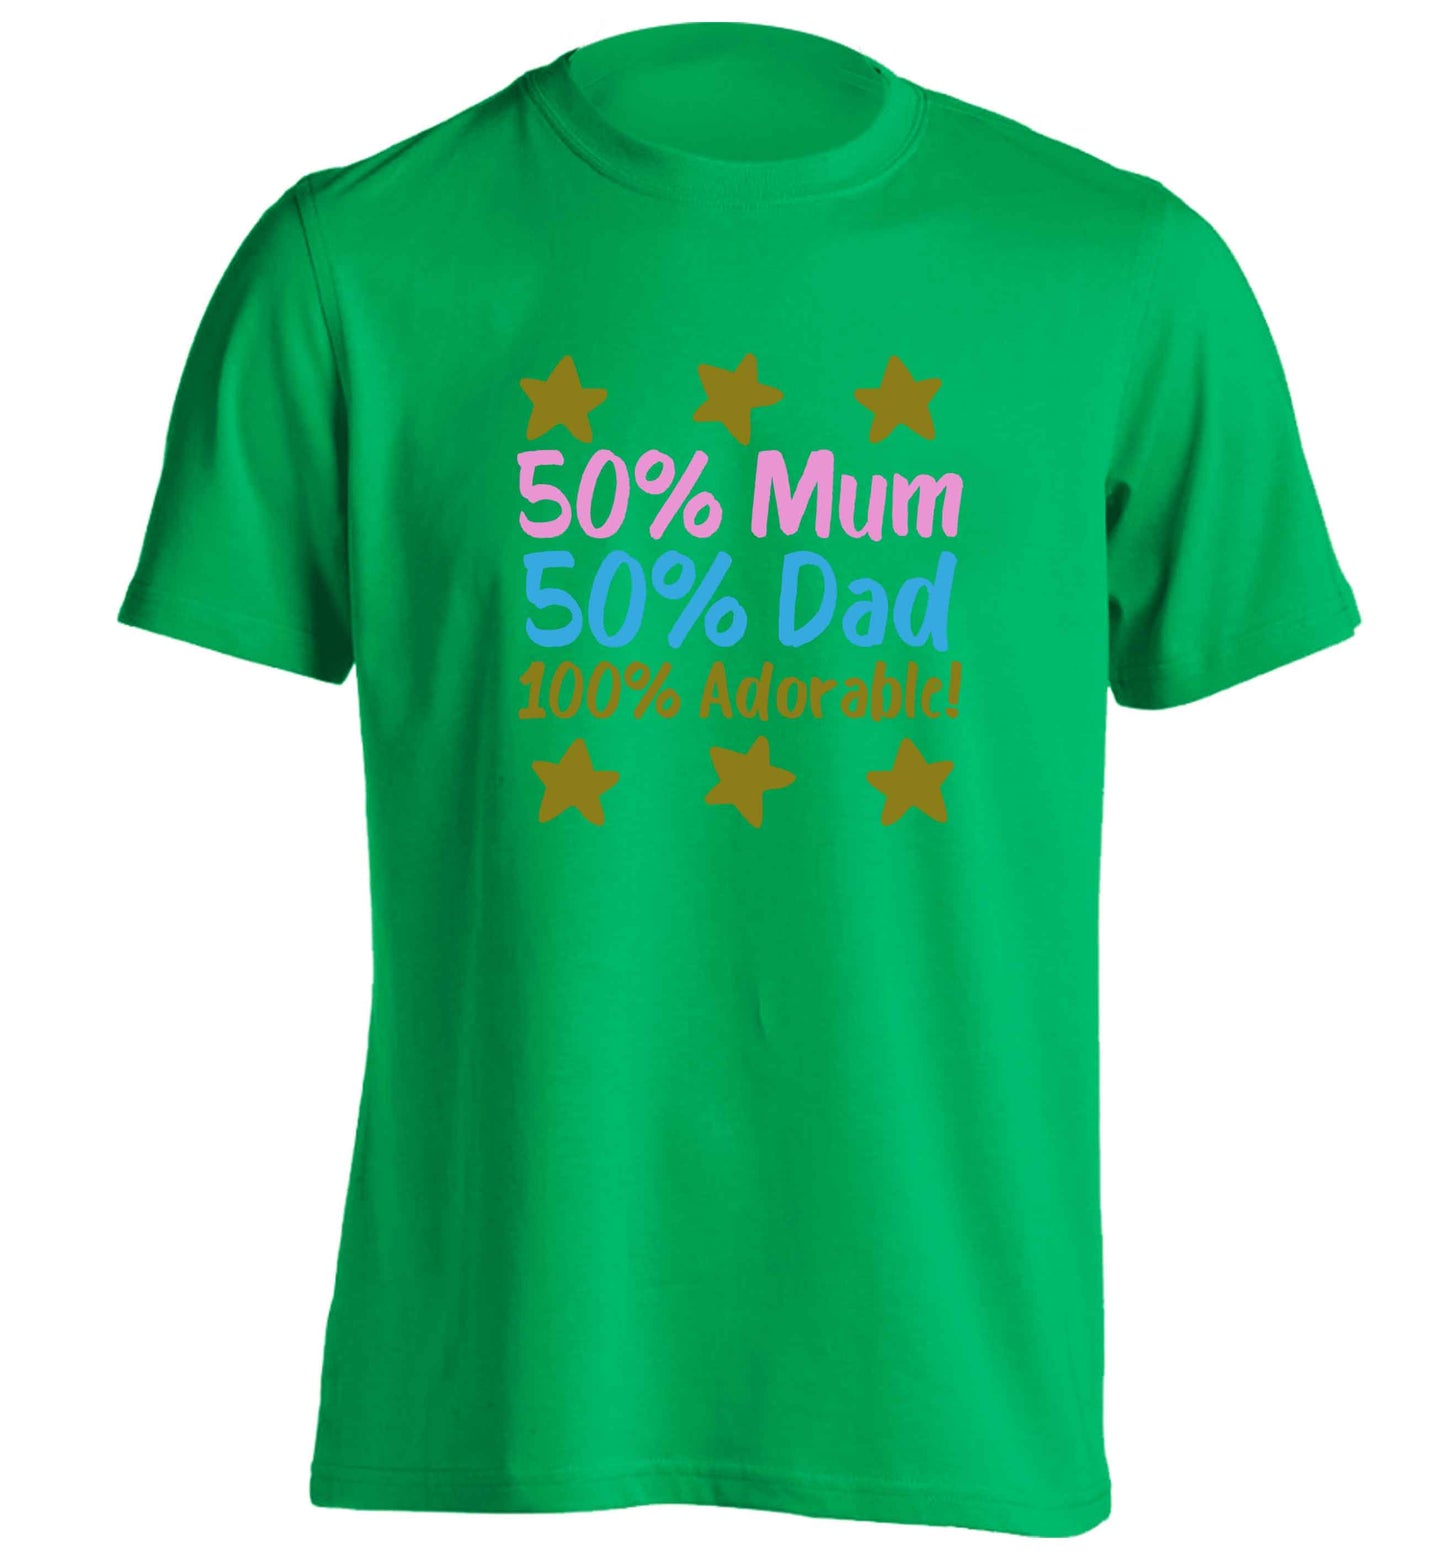 50% mum 50% dad 100% adorable adults unisex green Tshirt 2XL